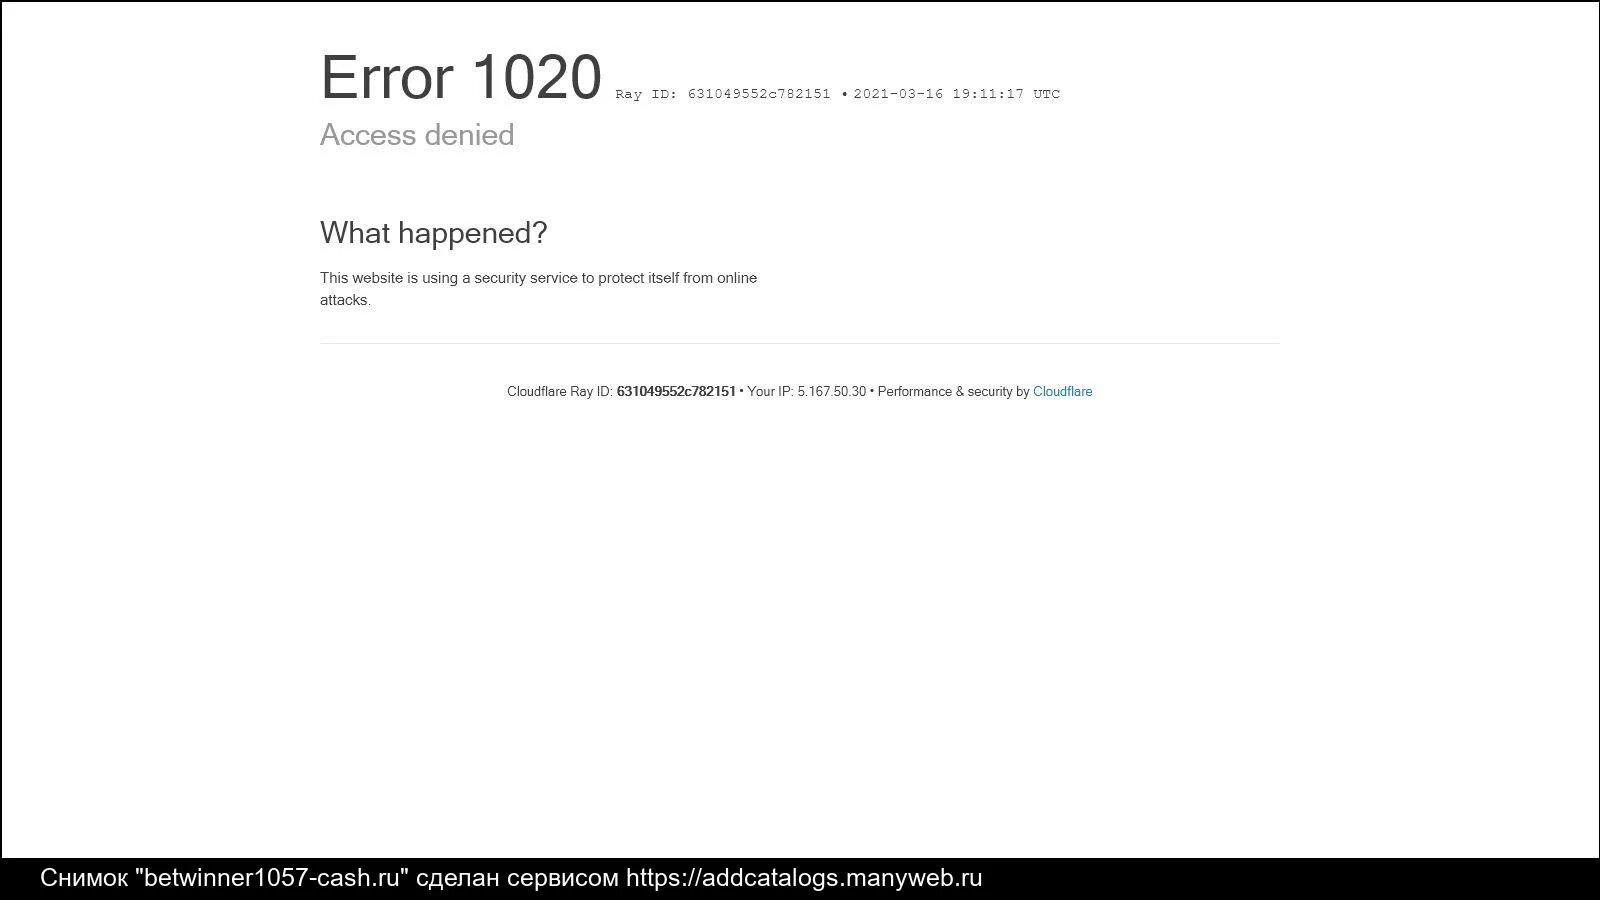 1009 Ошибка. Cloudflare access denied. Access denied перевод на русский. КИНОПОИСК ошибка 1009. C access denied